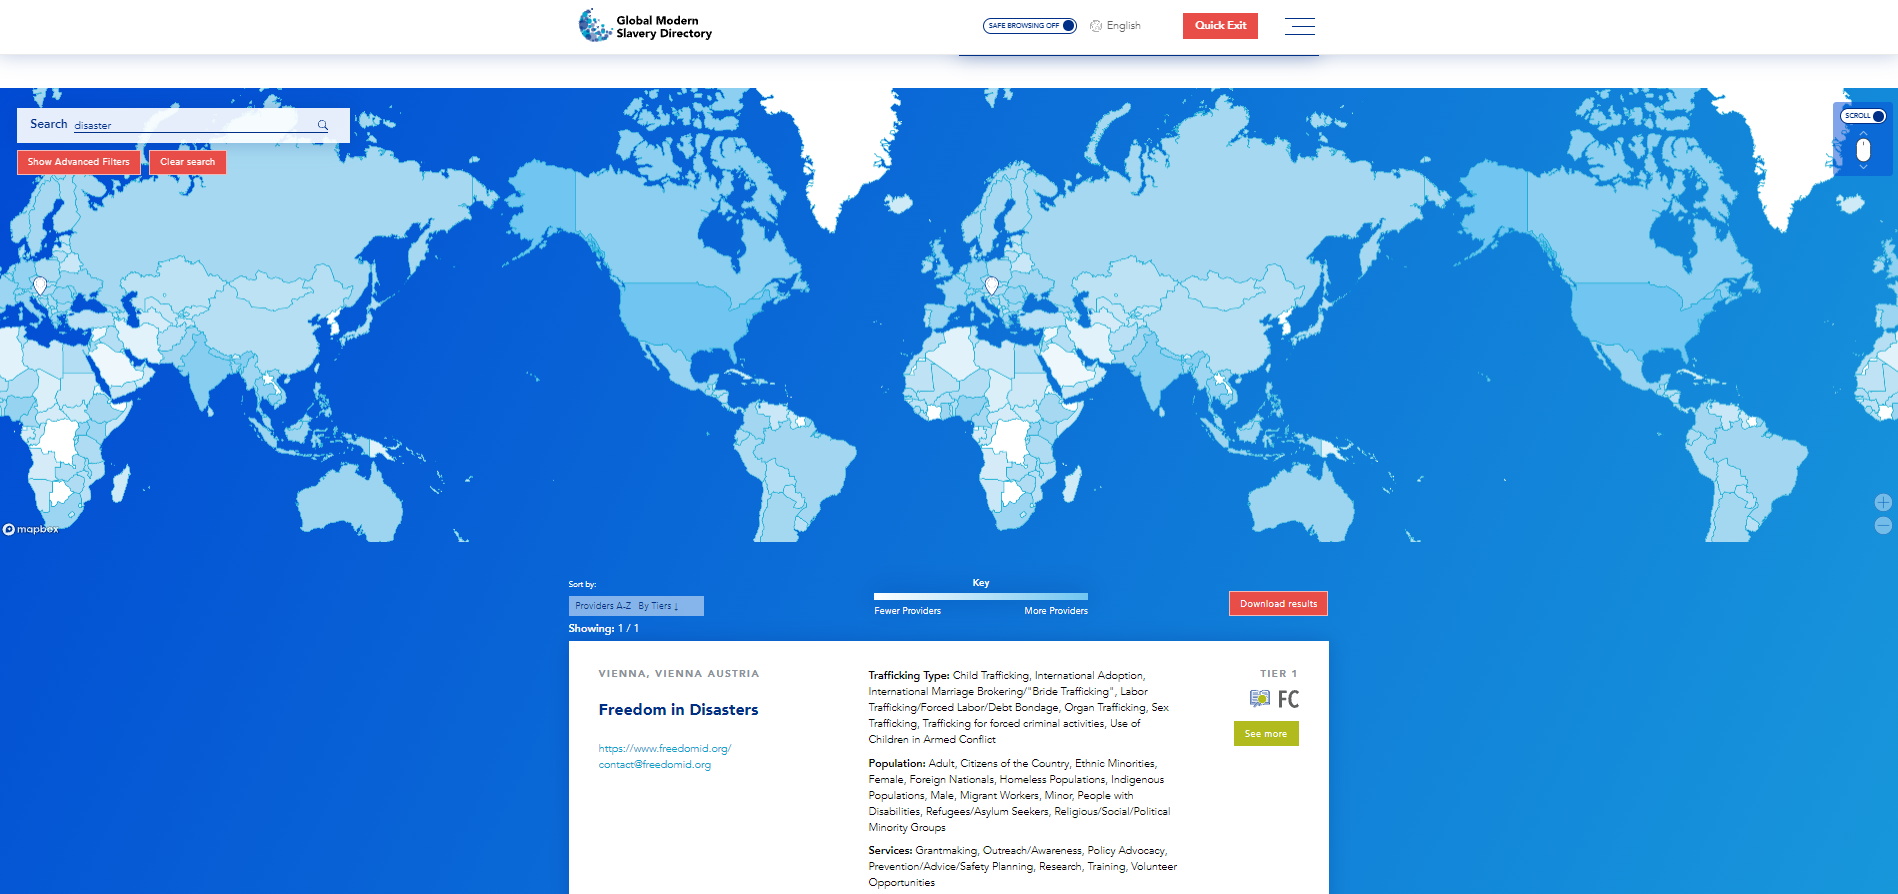 Global Modern Slavery Directory Image